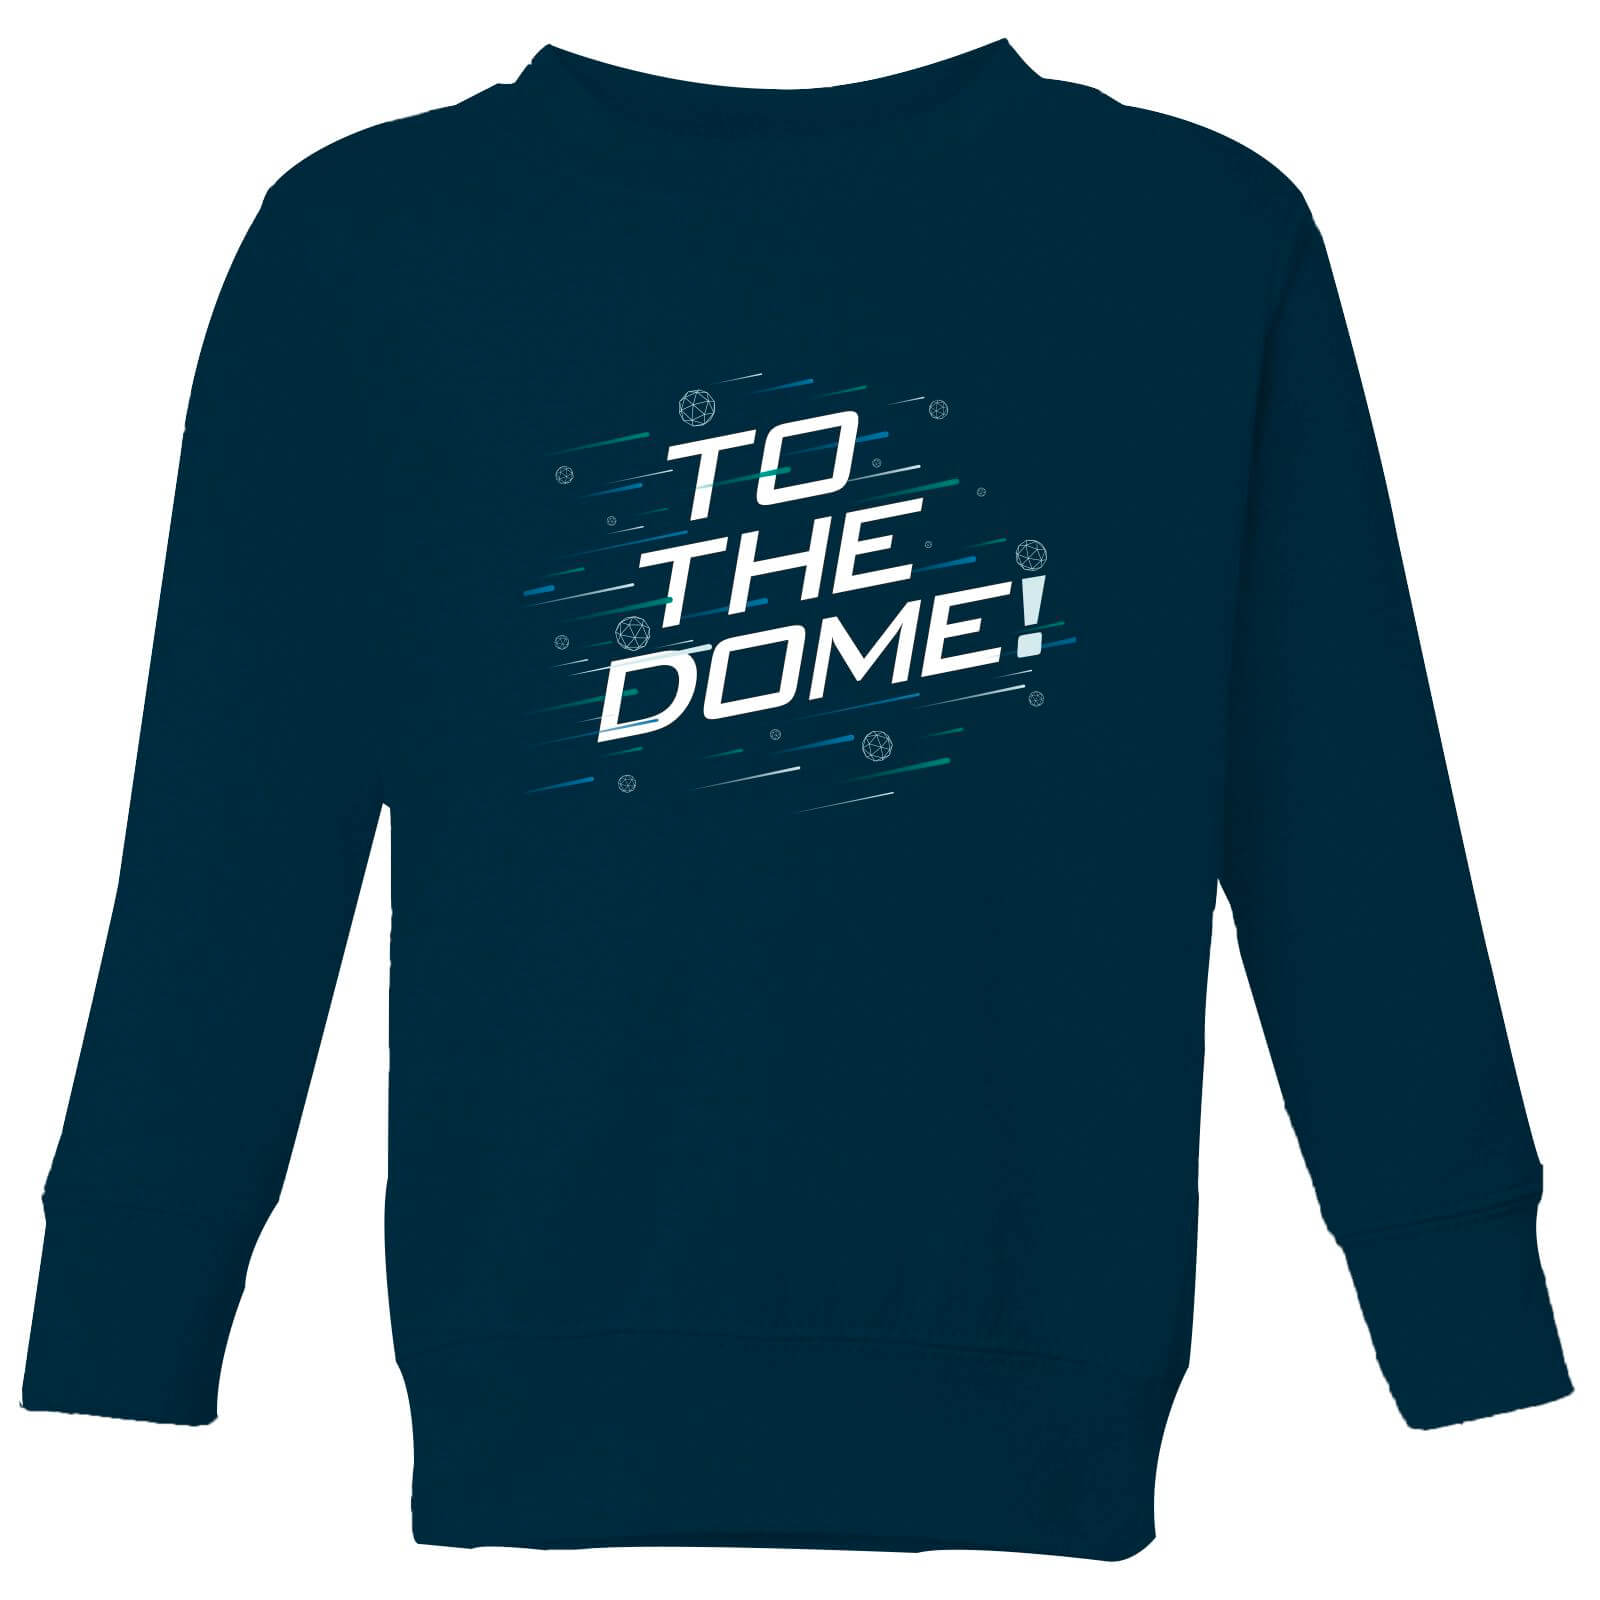 Crystal Maze To The Dome! Kids' Sweatshirt - Navy - 9-10 Years - Navy